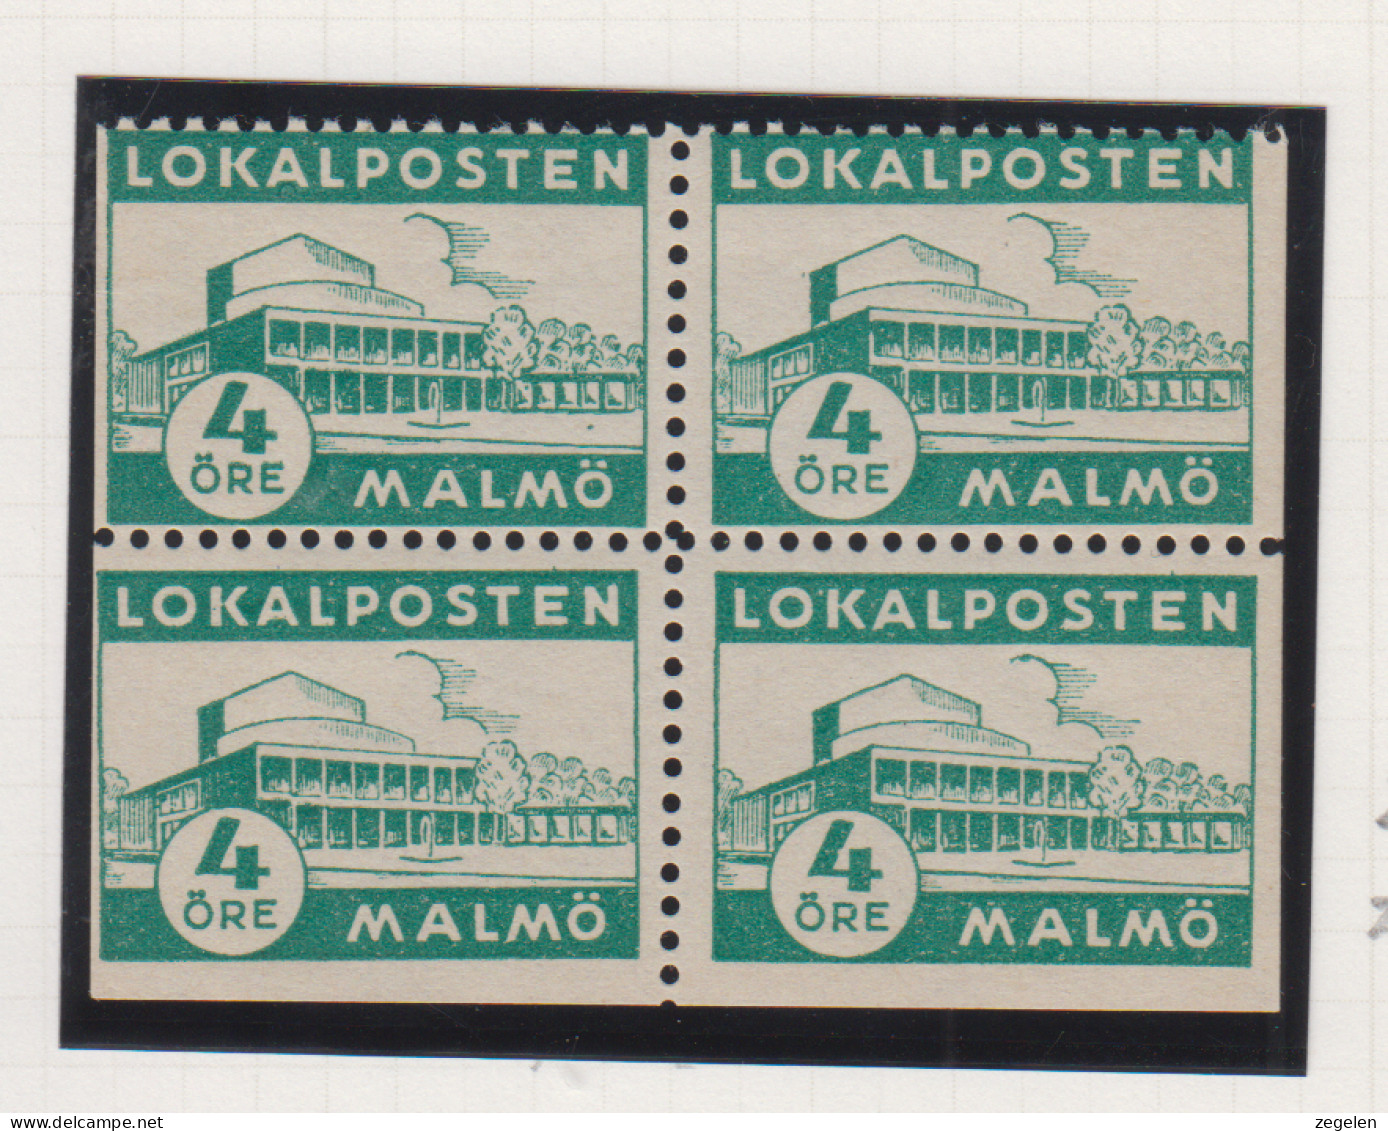 Zweden Lokale Zegel Cat. Facit Sverige 2000 Private Lokaalpost Malmö Lokalpostexpres 2 ; 4 Verschillende Tandingen - Local Post Stamps